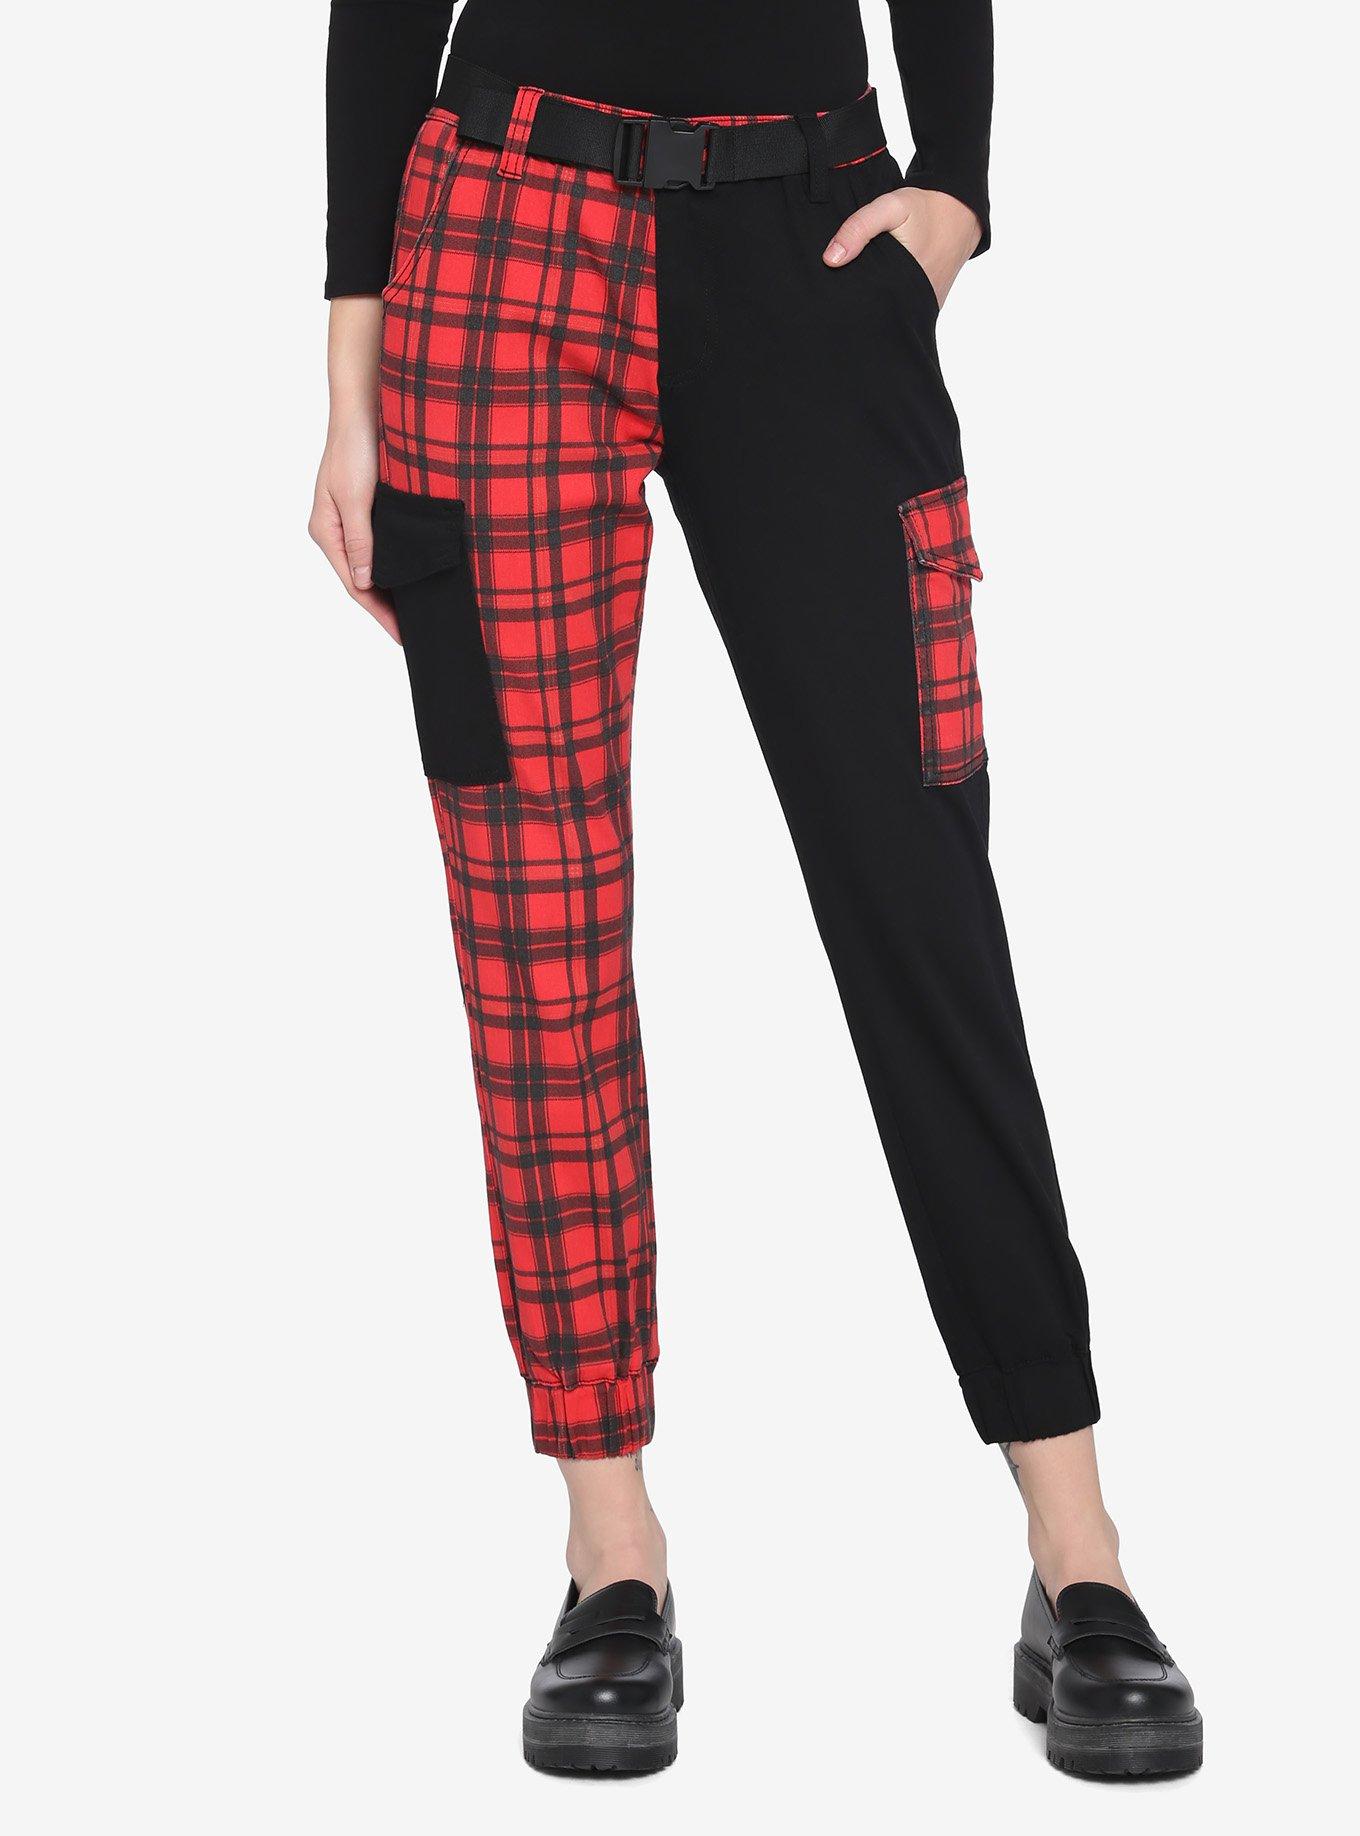 Hot Topic Red Black Plaid Pants Size Medium